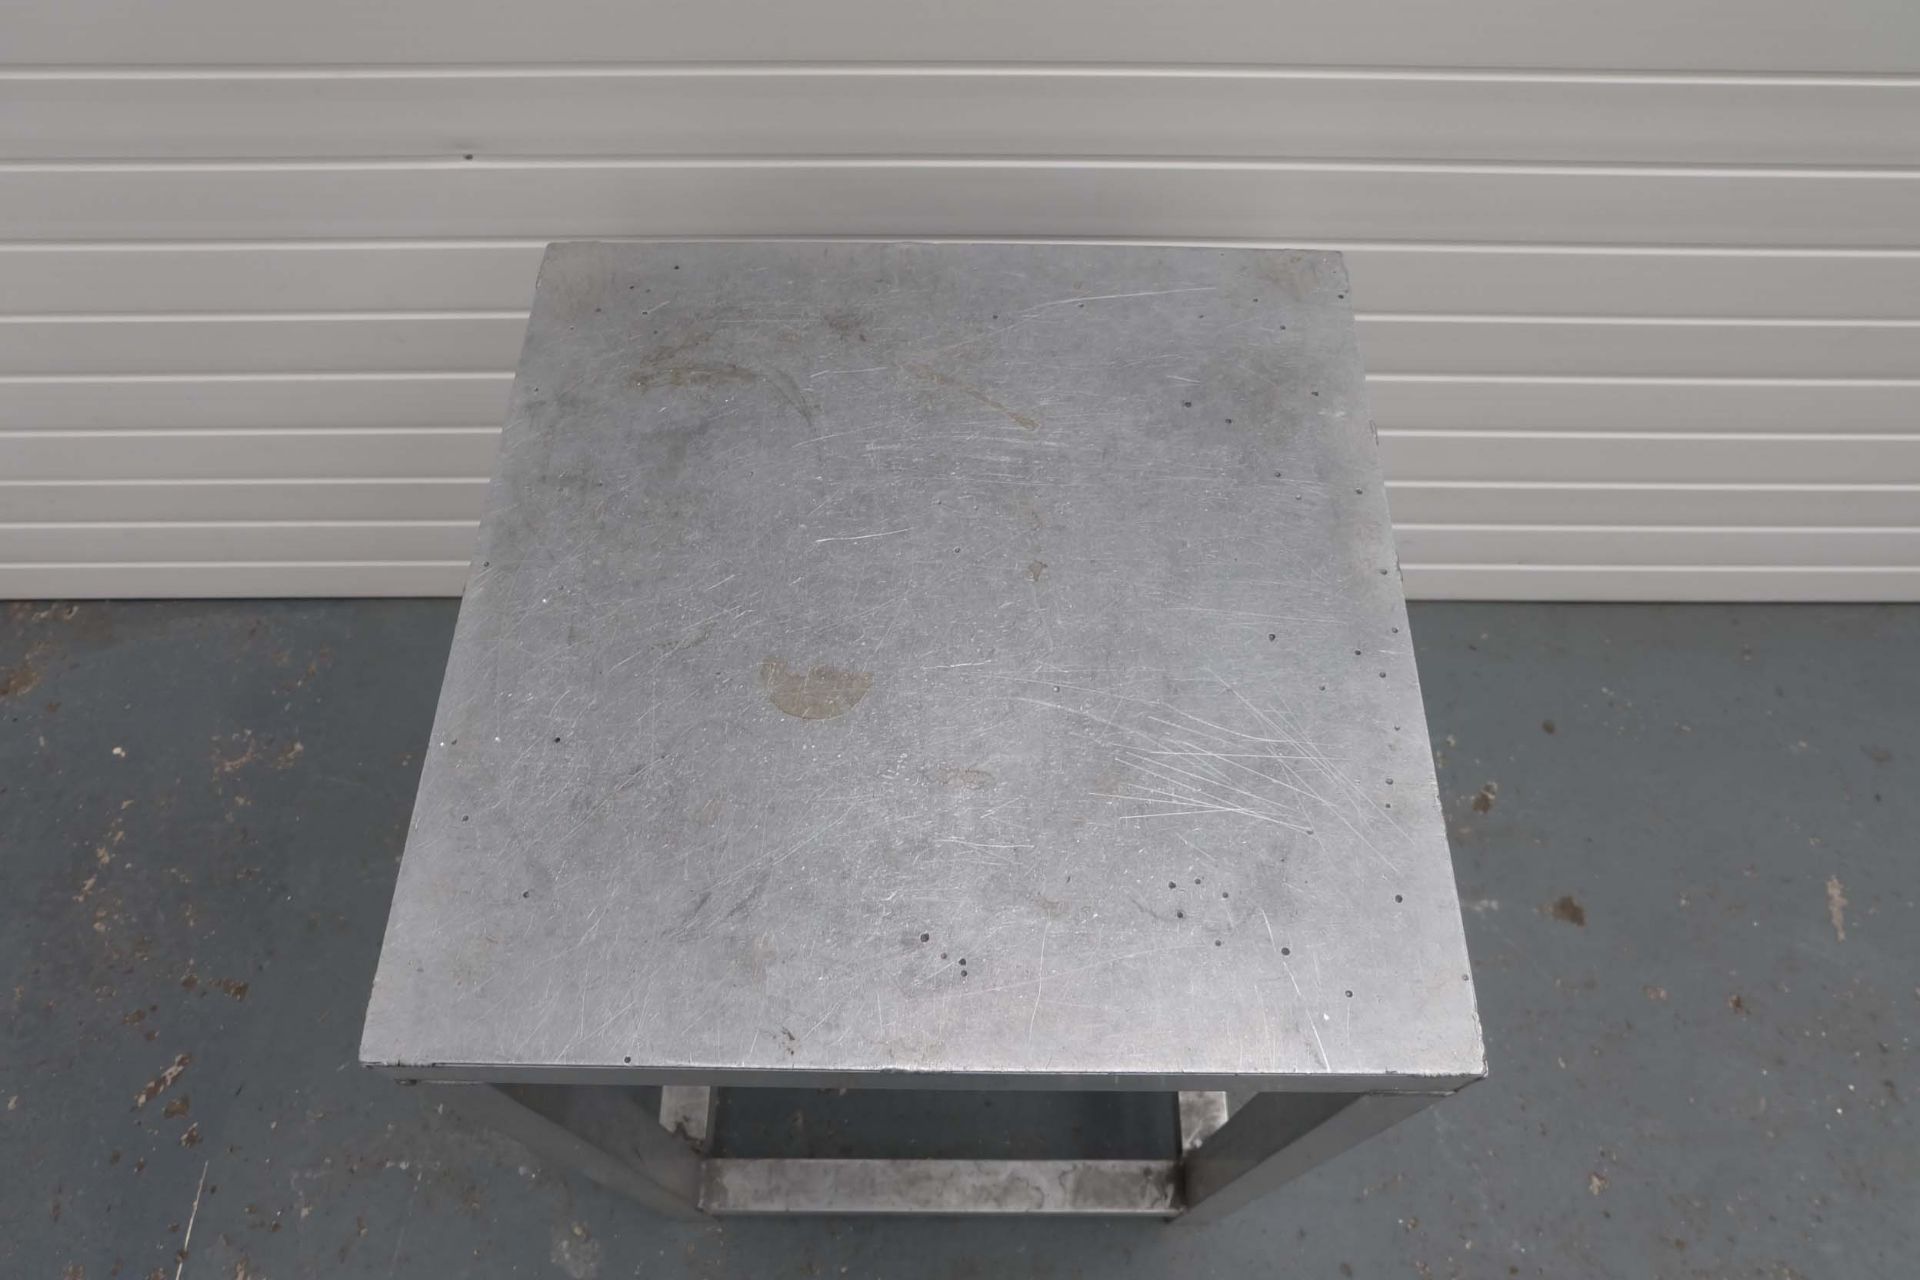 Aluminium Workbench With Aluminium Top. 24" X 24" x 53" High. - Image 3 of 3